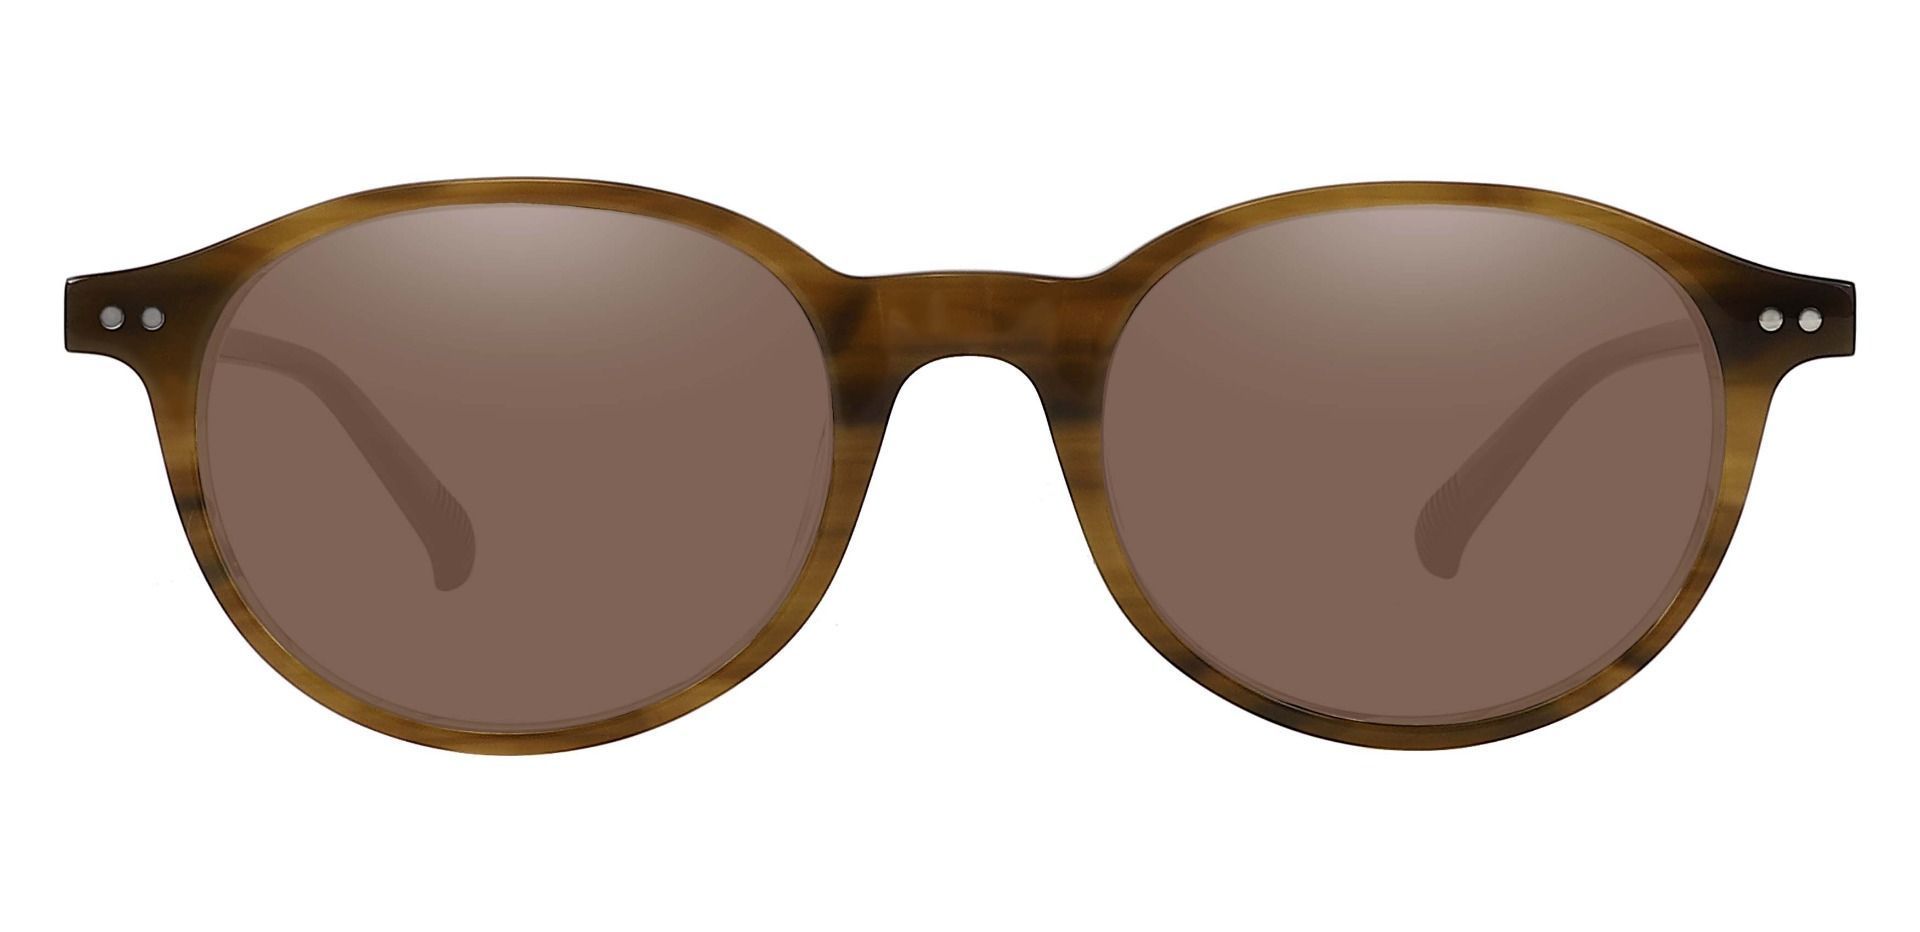 Avon Oval Prescription Sunglasses - Brown Frame With Brown Lenses